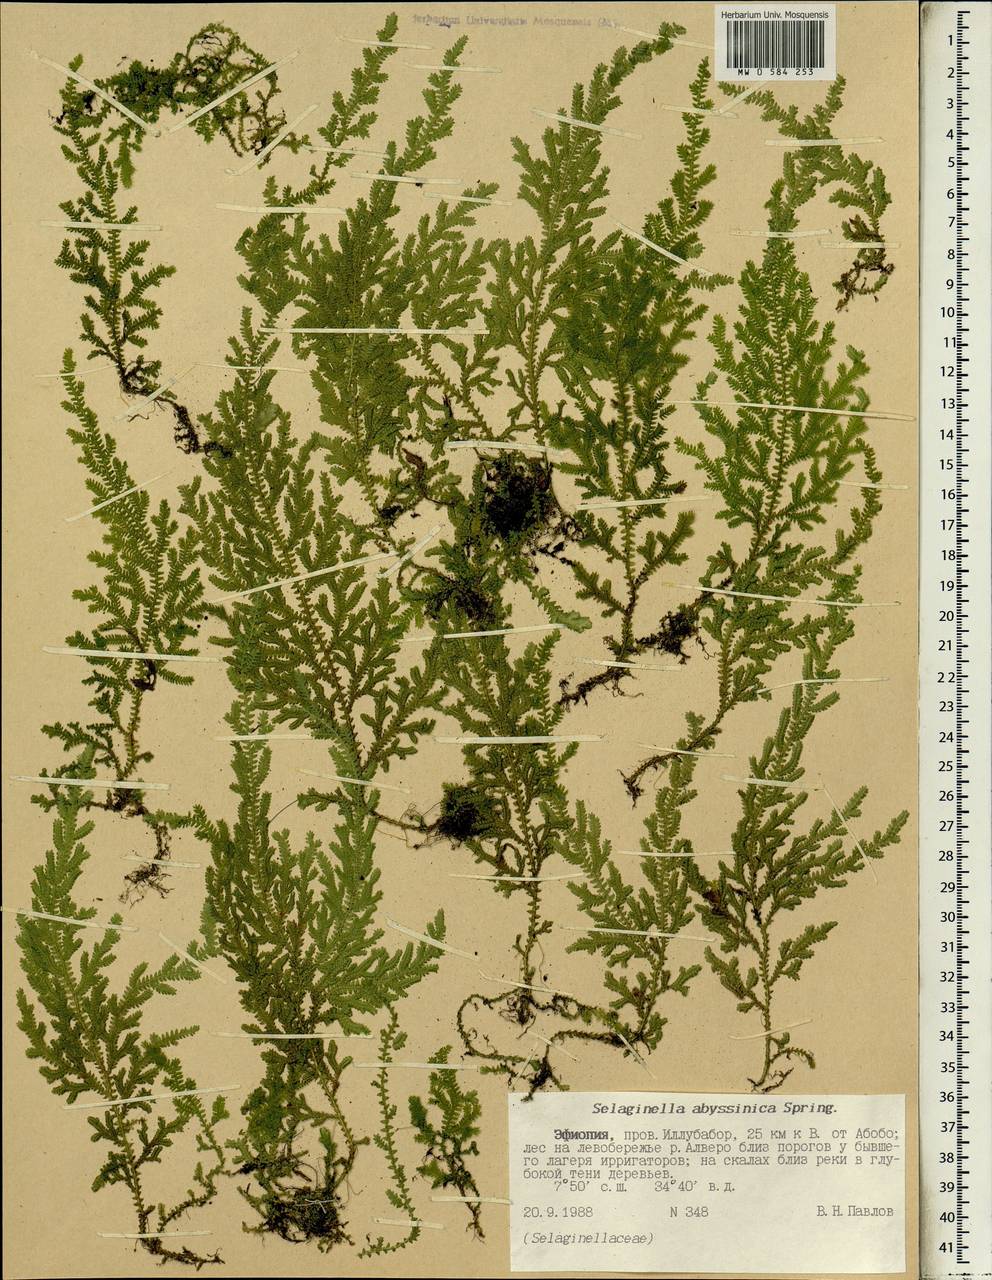 Selaginella goudotiana var. abyssinica (Spring) Bizzarri, Африка (AFR) (Эфиопия)